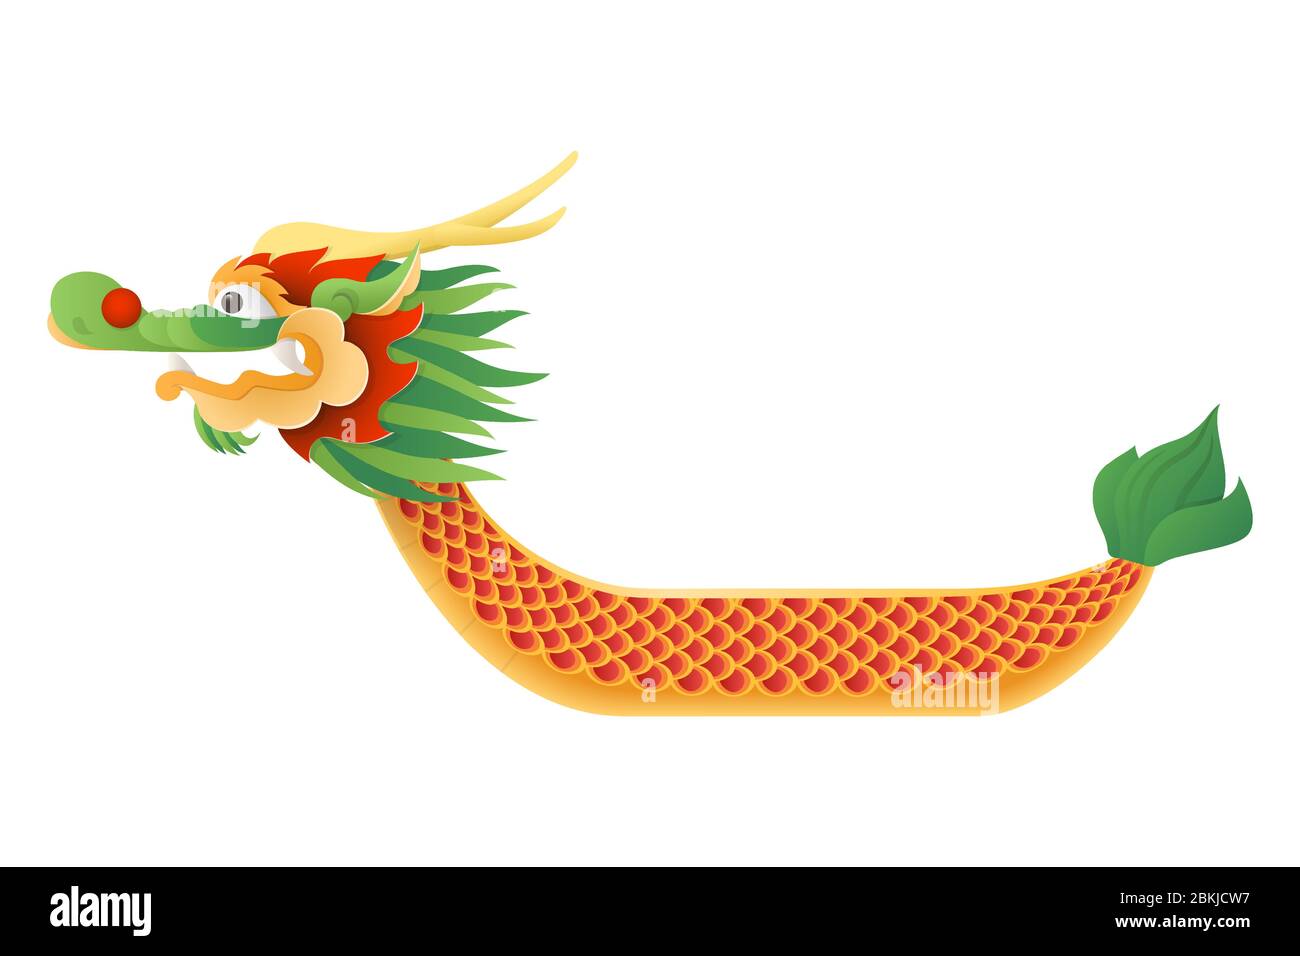 Festival tradicional de barcos de dragón - ilustración de vectores de barcos aislados sobre fondo transparente - festival Duanwu o Zongxiao Ilustración del Vector